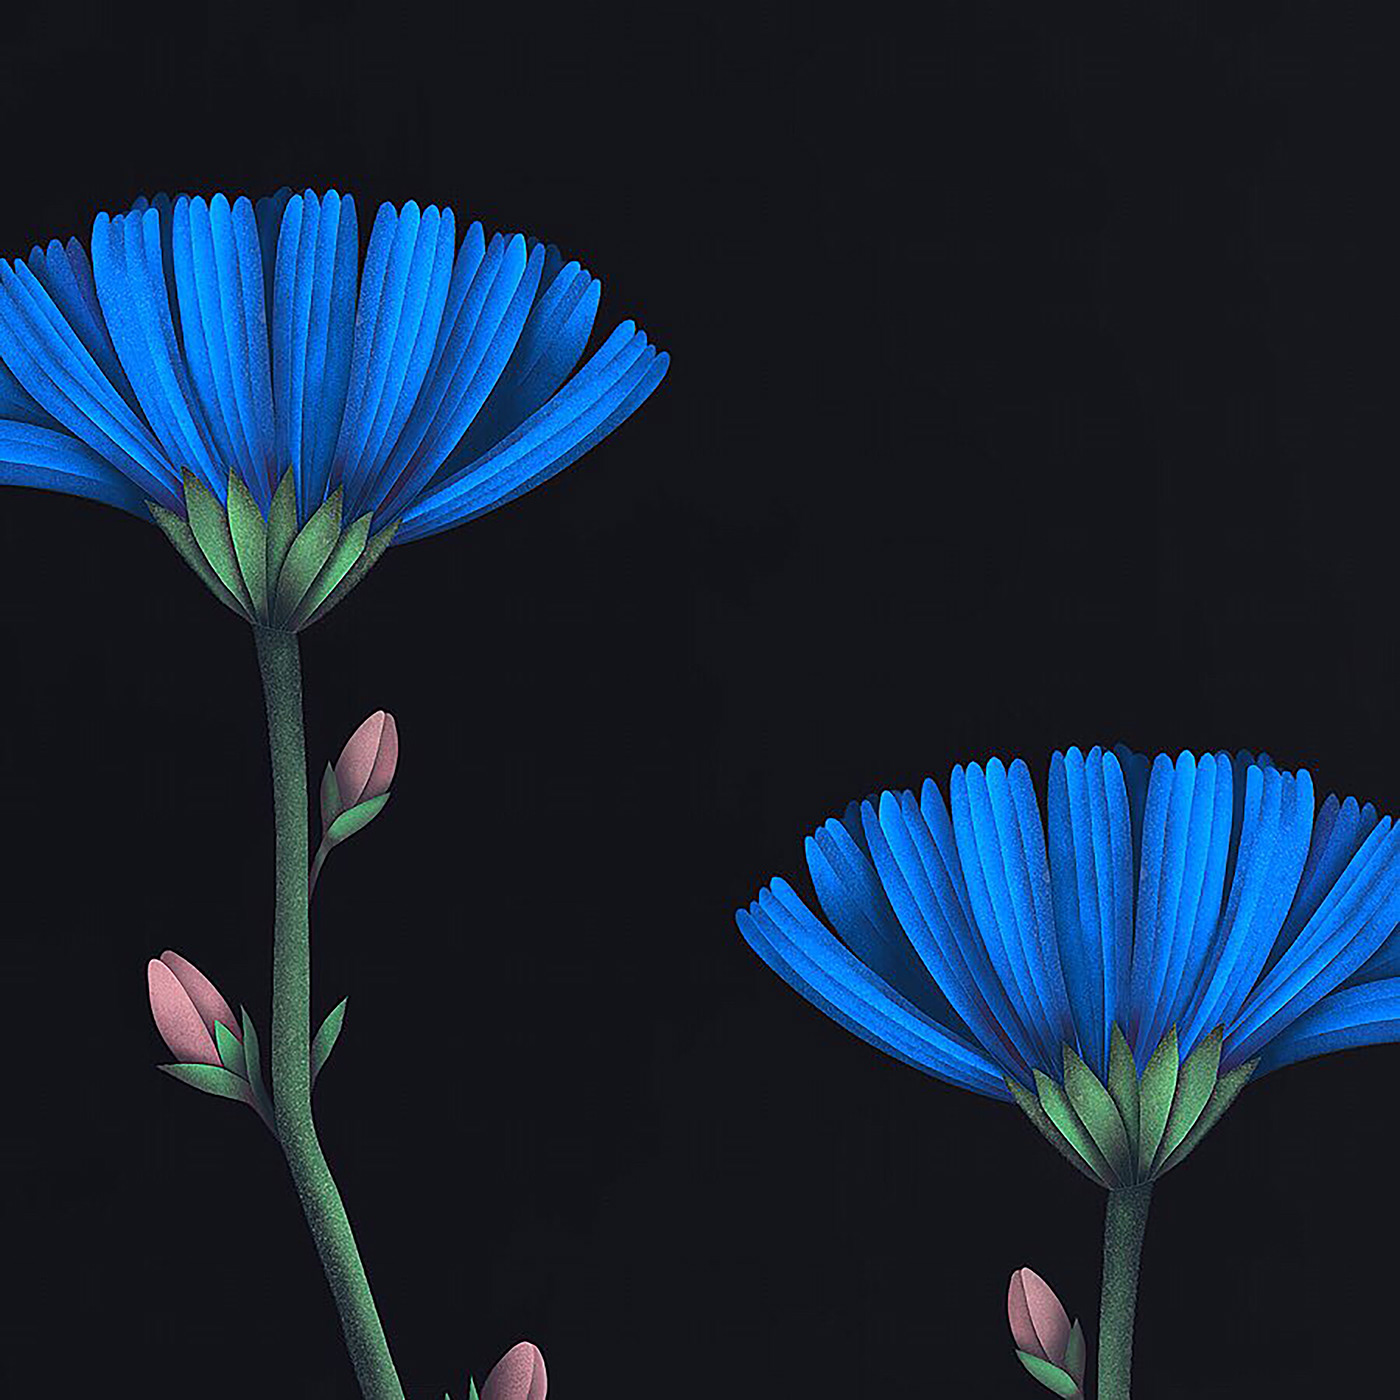 Digital Art  Procreate ILLUSTRATION  botanical art graphic design  Flowers digital illustration